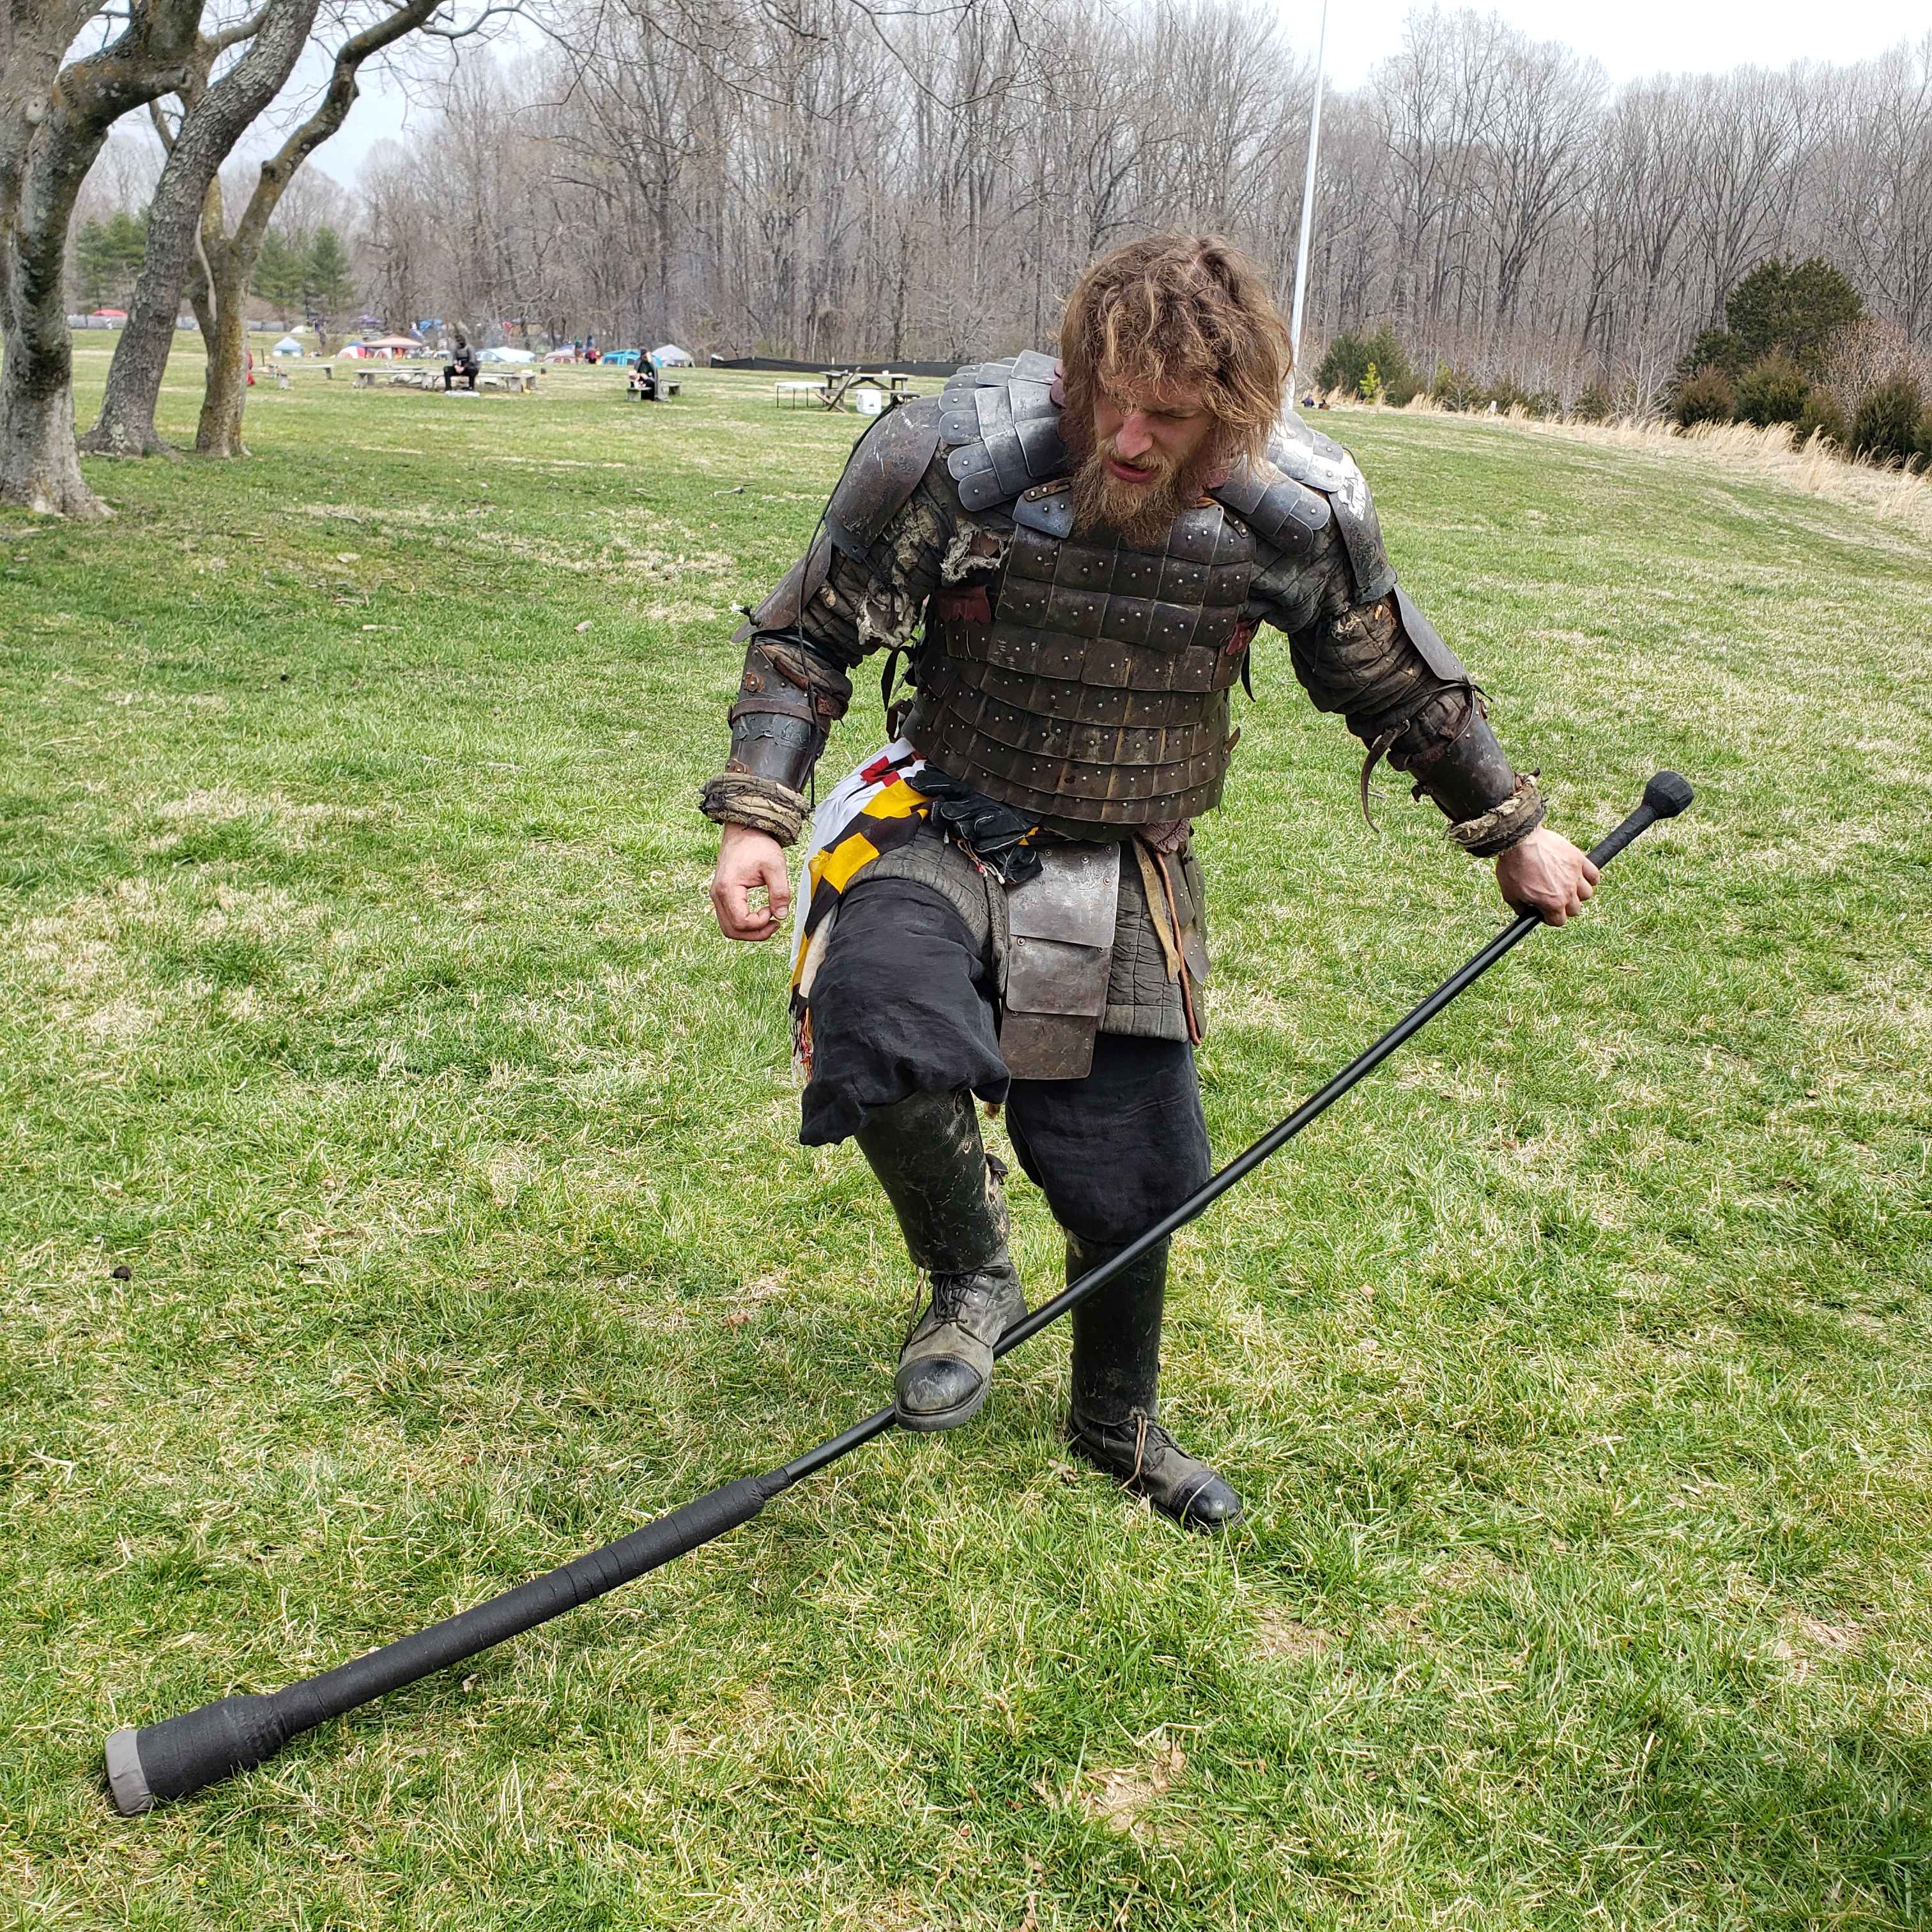 Amtgard Heavy Padded Sword (4-in Wide Blade) - Gorg the Blacksmith